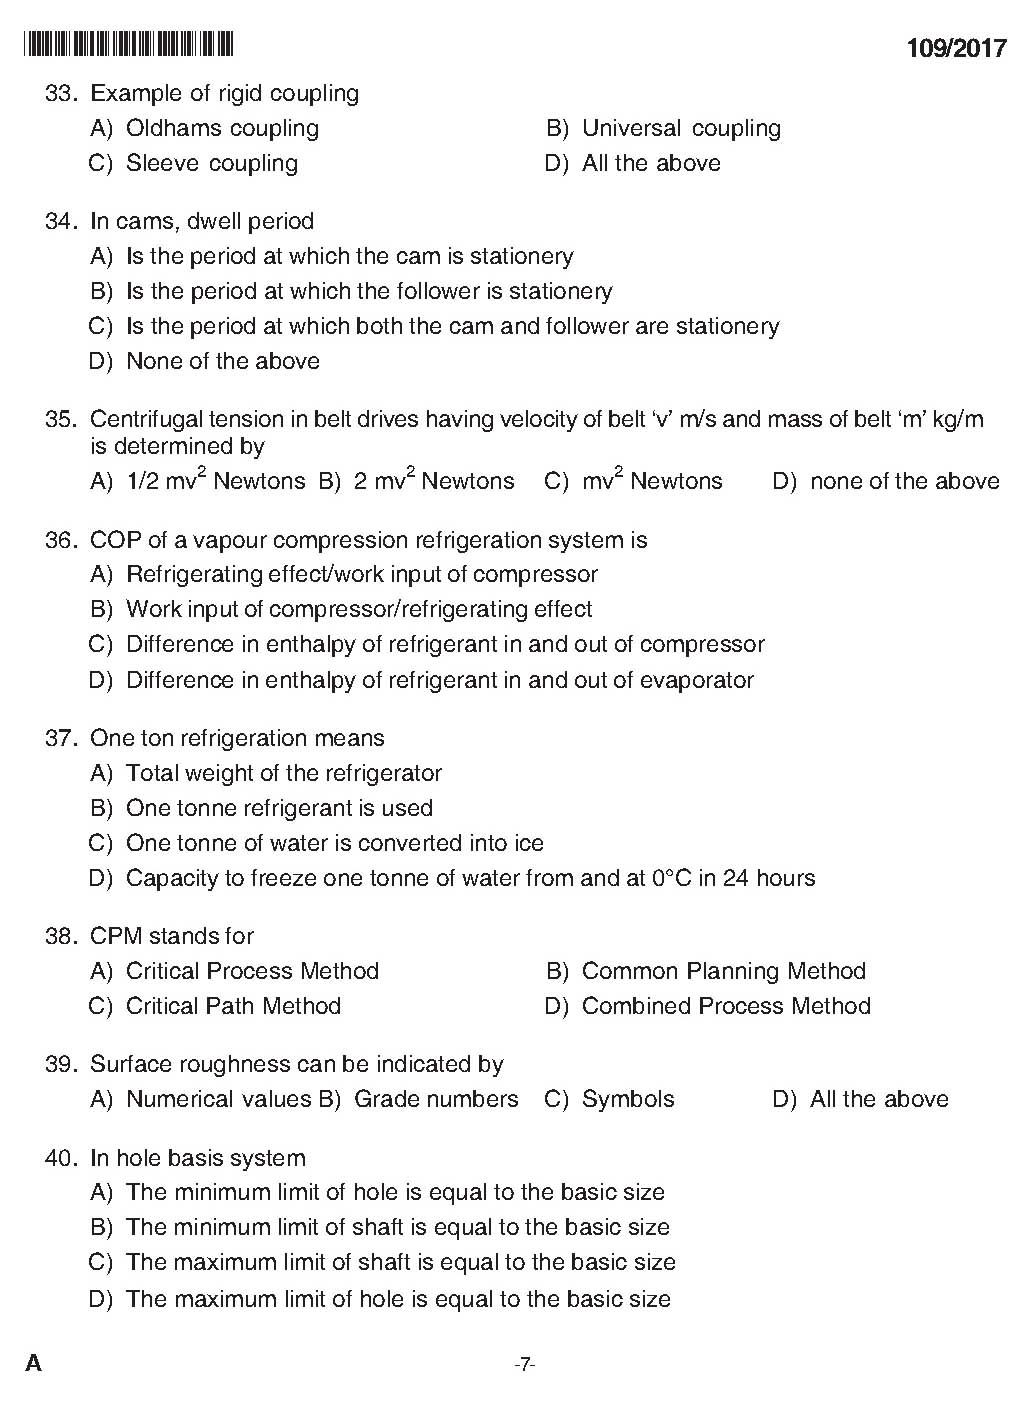 Kerala PSC Foreman Exam 2017 Question Paper Code 1092017 6